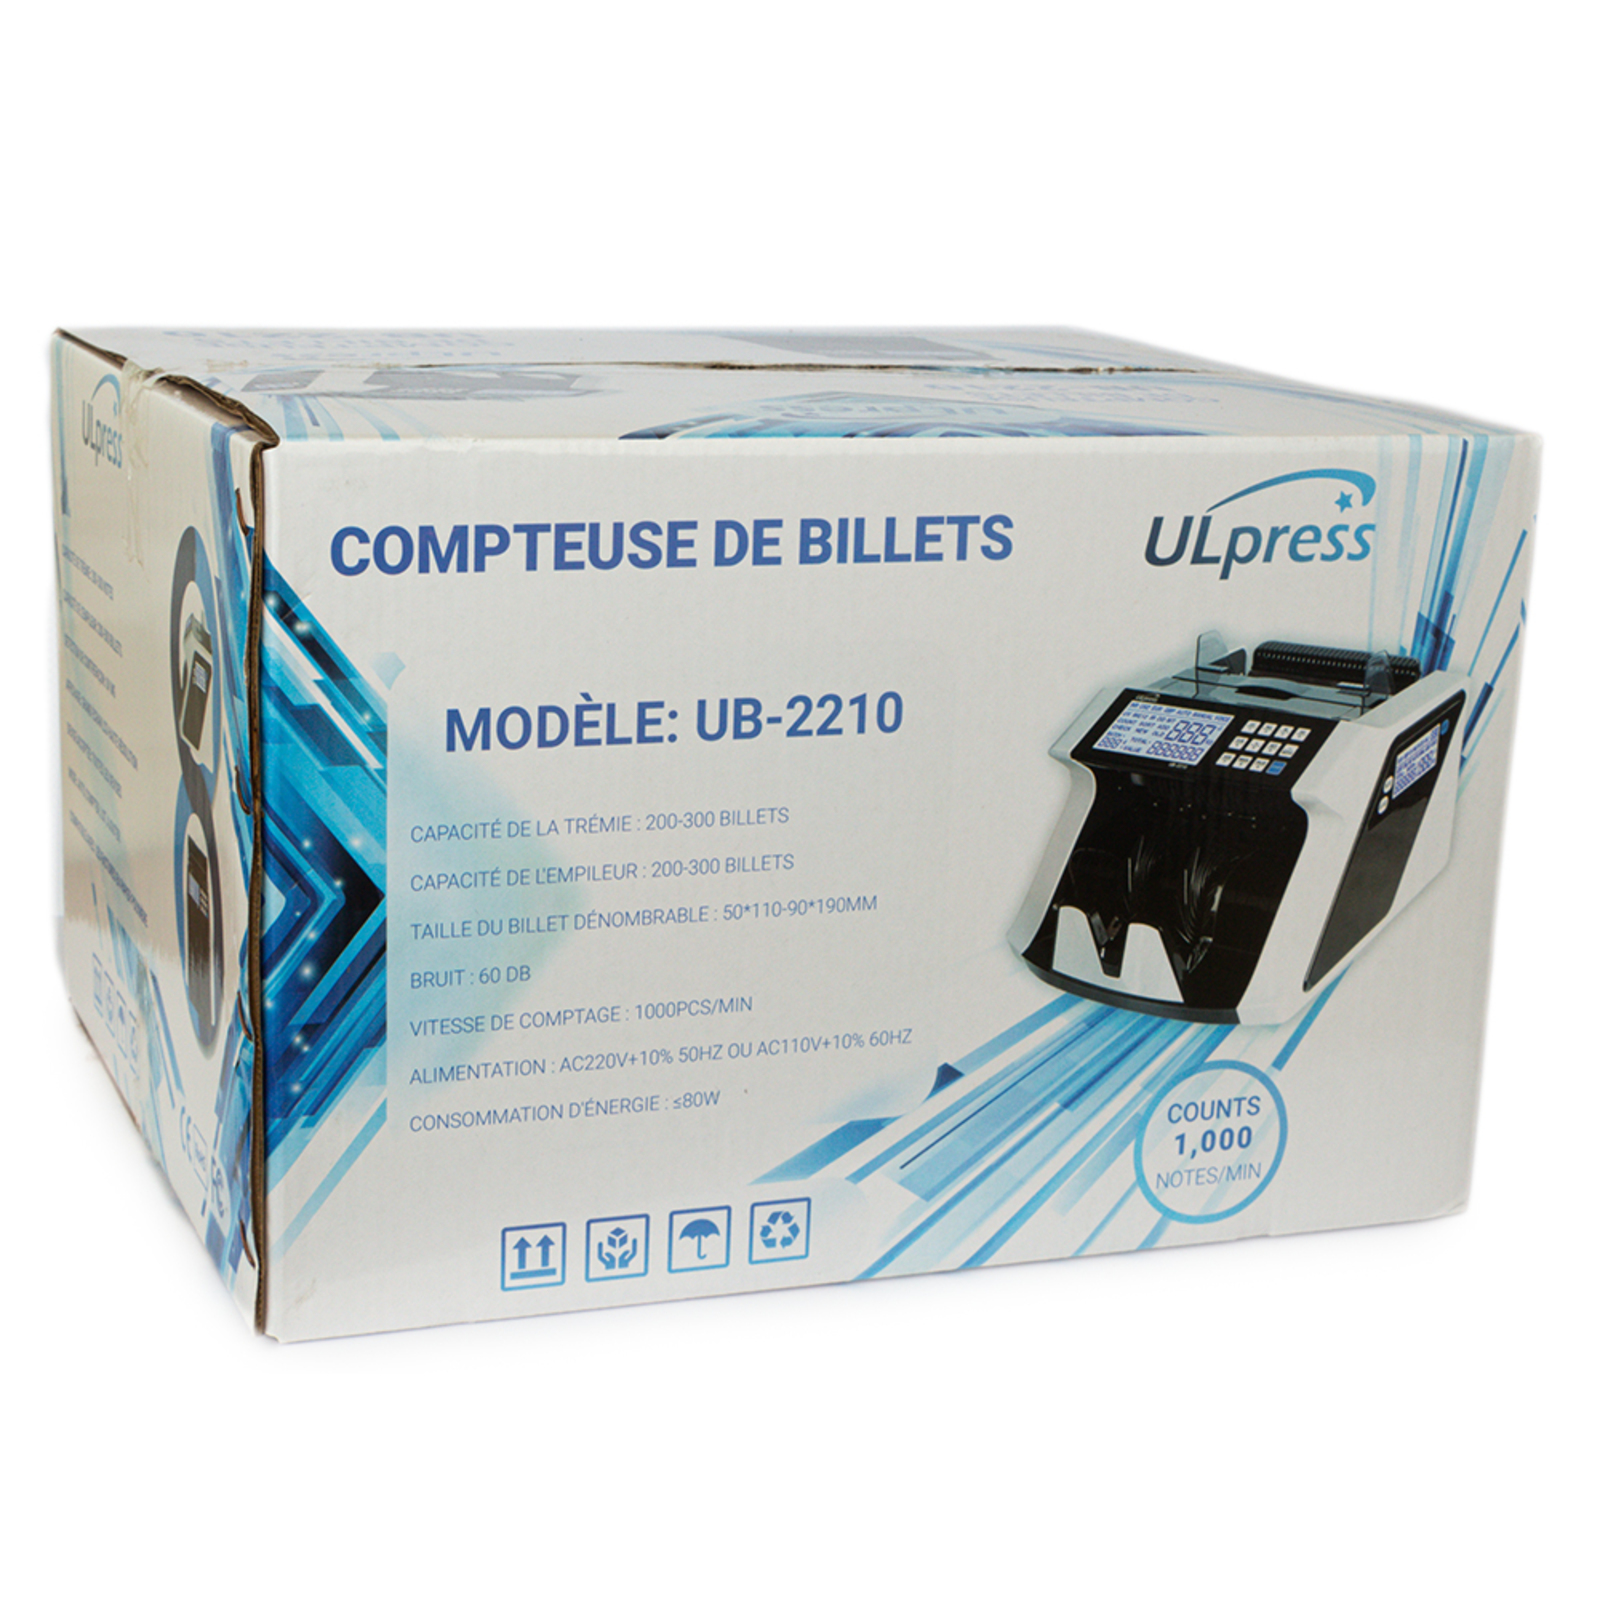 COMPTEUSE DE BILLET HI-PRO HL2100 (HL2100) à 1 790,00 MAD -   MAROC